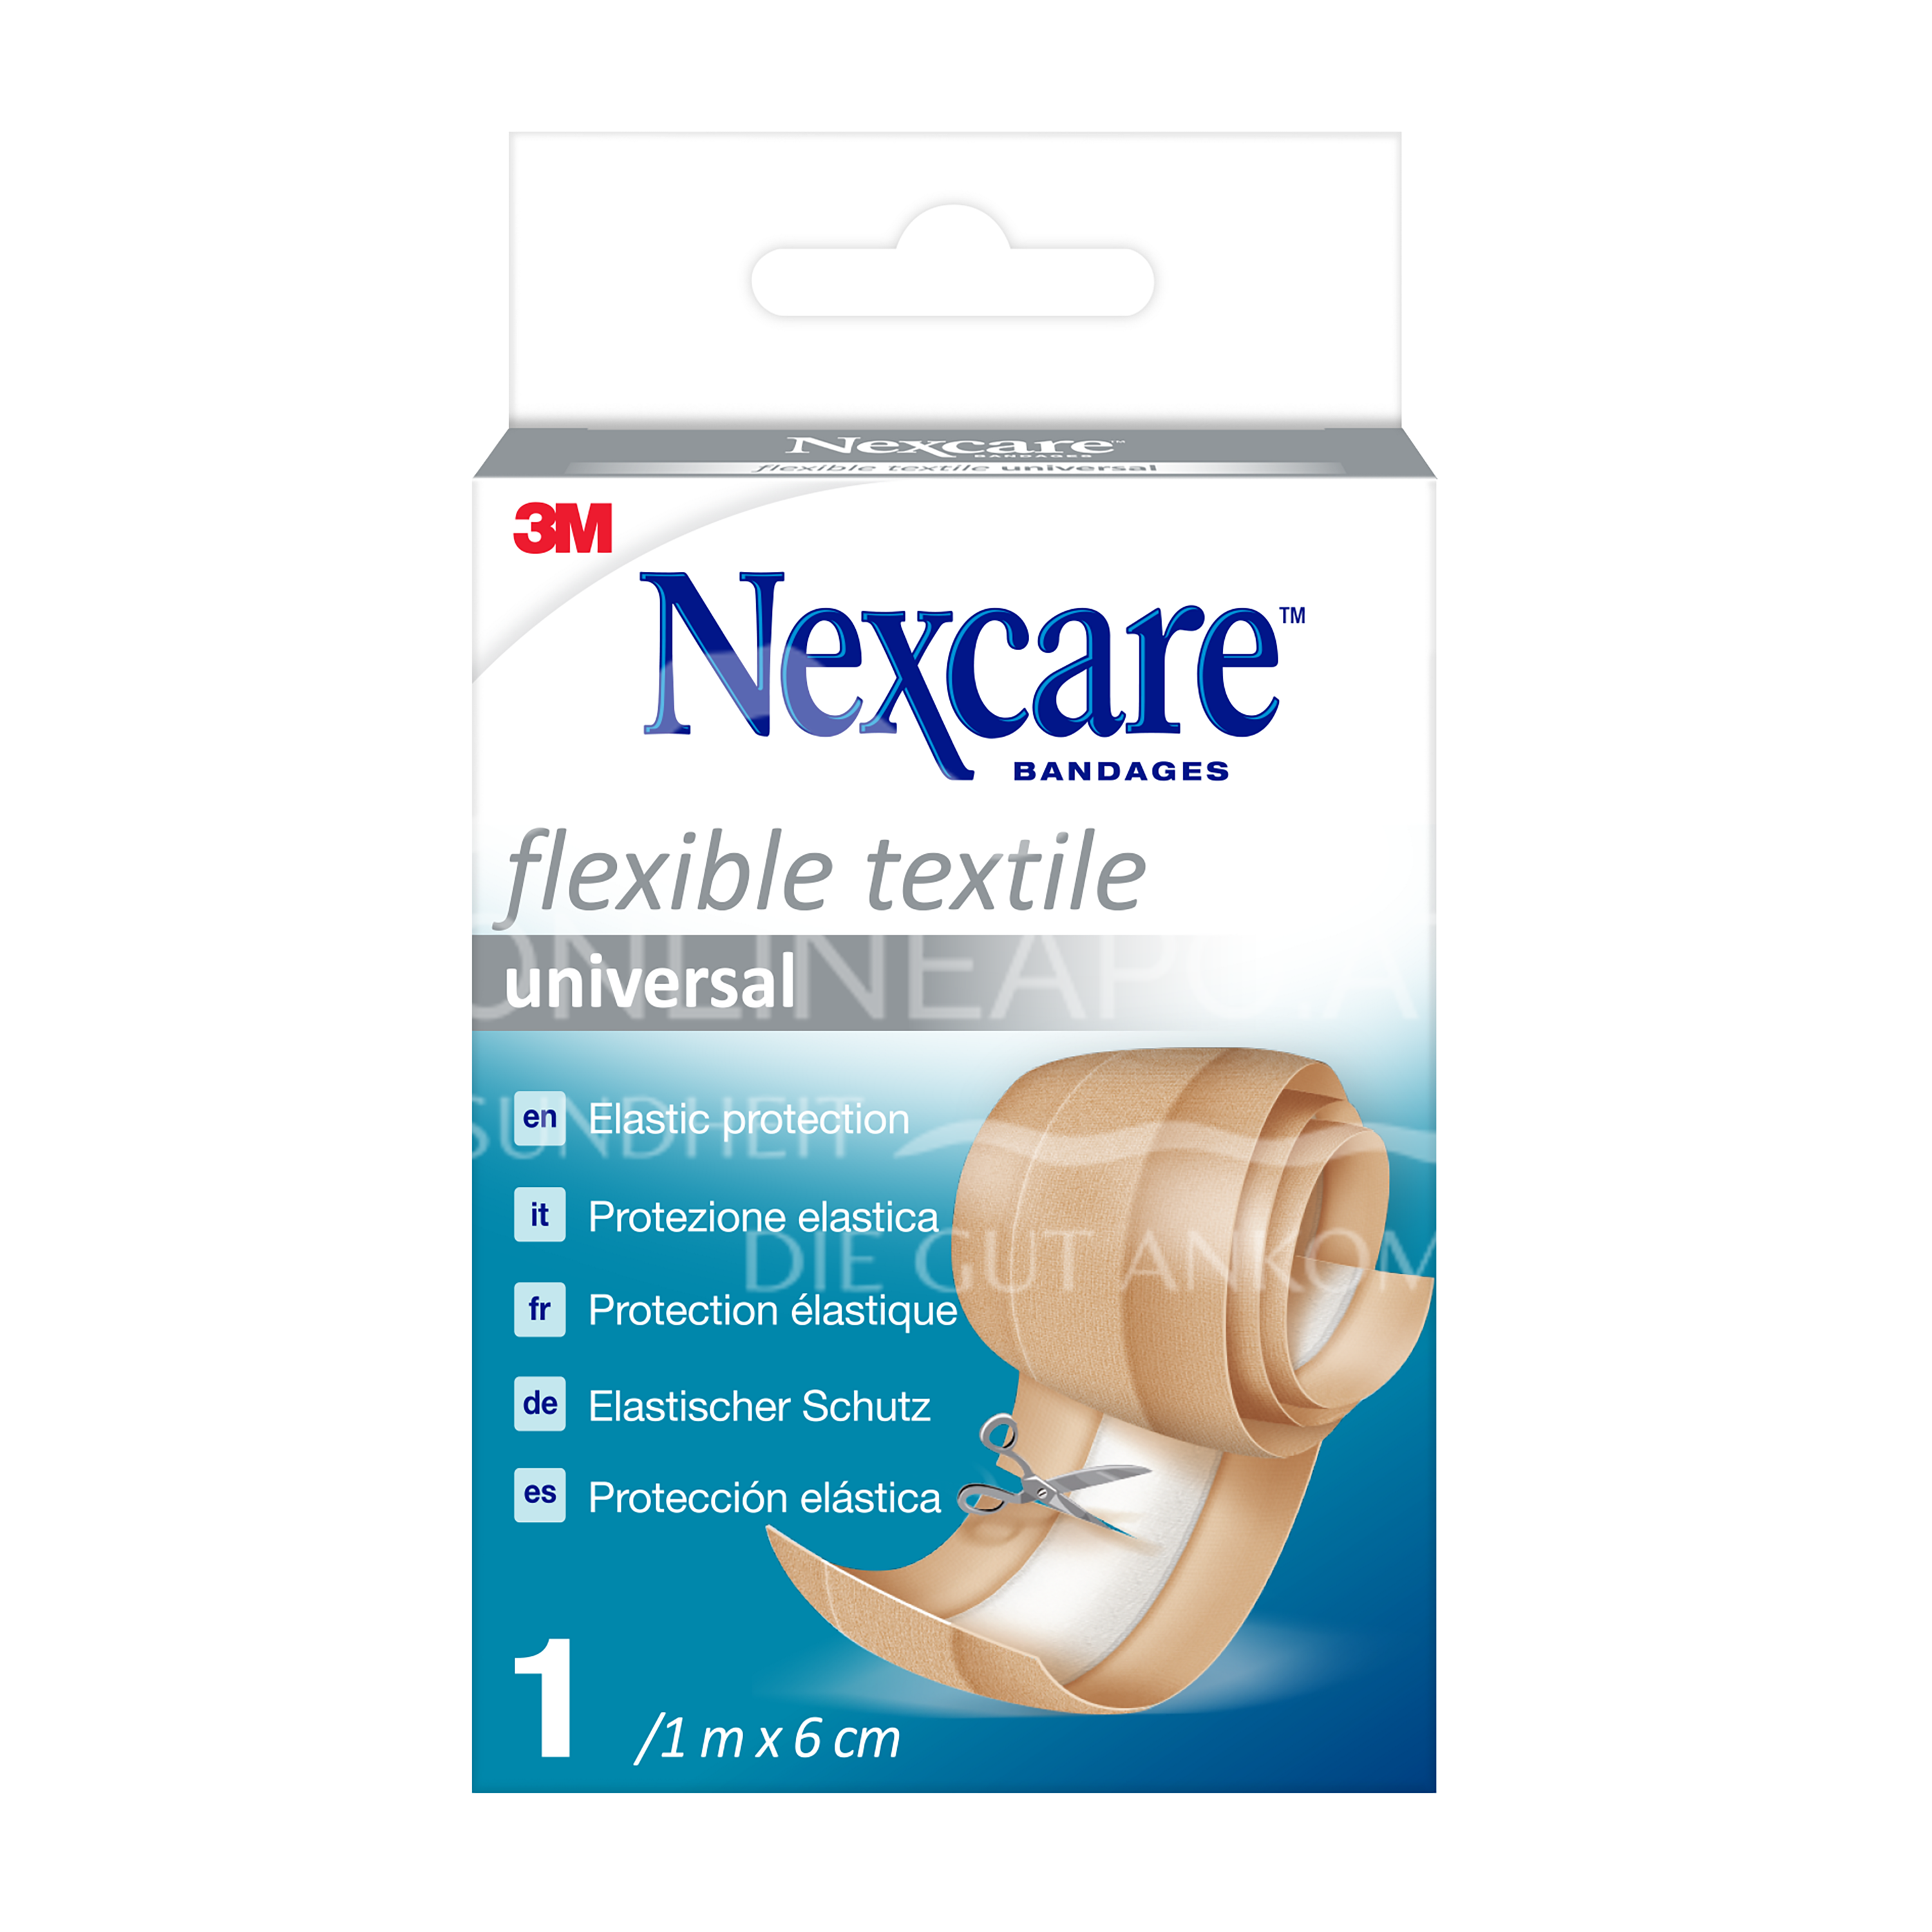 3M Nexcare™ Flexible Textile Universal Band Pflaster, 1 m x 6 cm